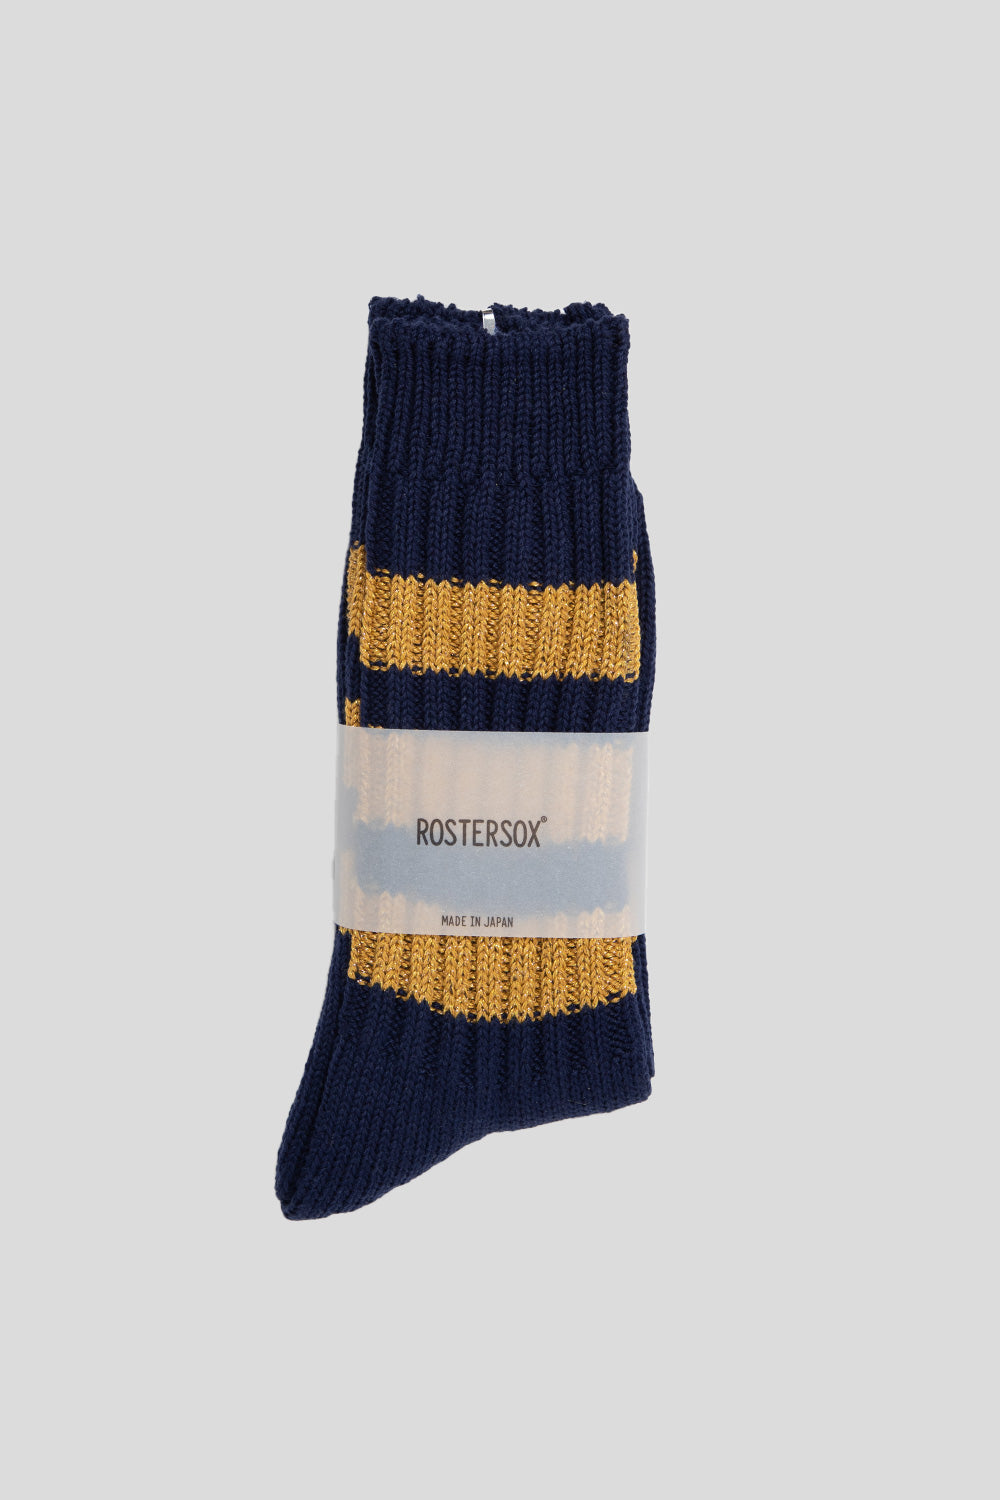 Rostersox Boston Socks in Yellow